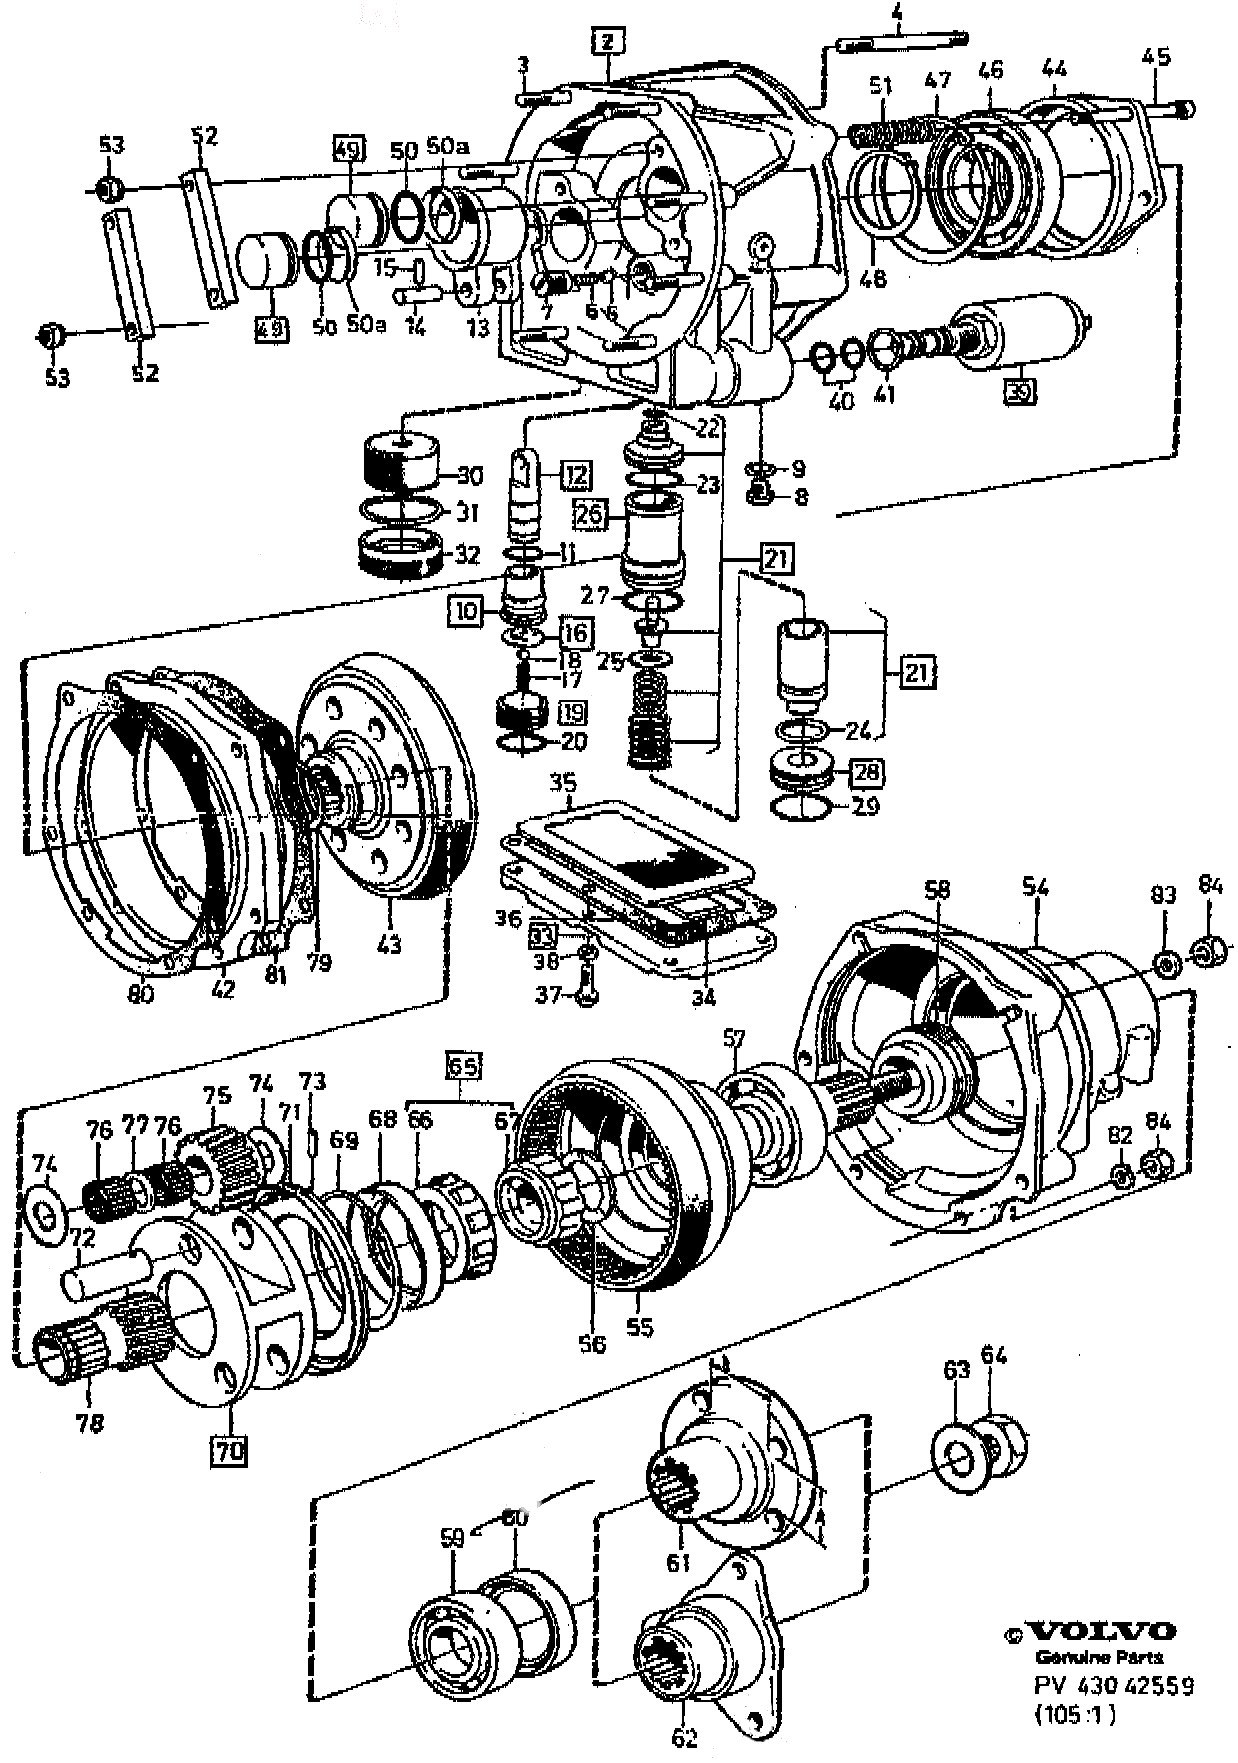 International Truck Parts Diagram Volvo Parts Diagrams Wiring Diagram • Of International Truck Parts Diagram